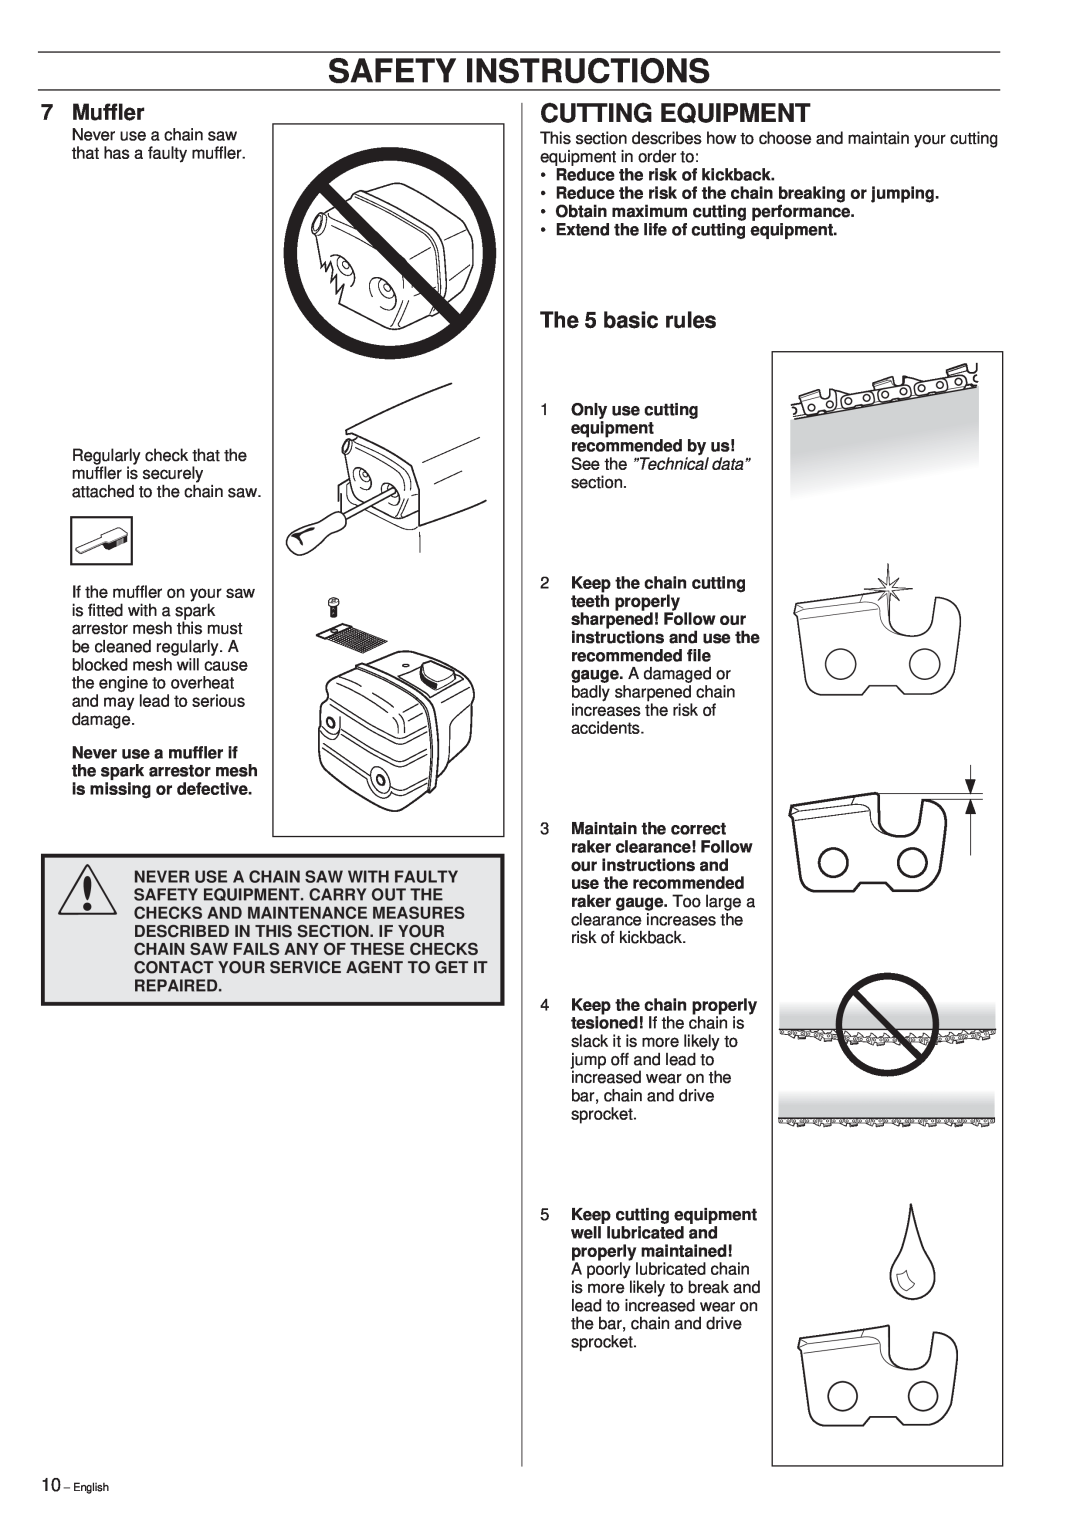 Husqvarna 340, 345, 350 manual Cutting Equipment, The 5 basic rules, Safety Instructions, Muffler 